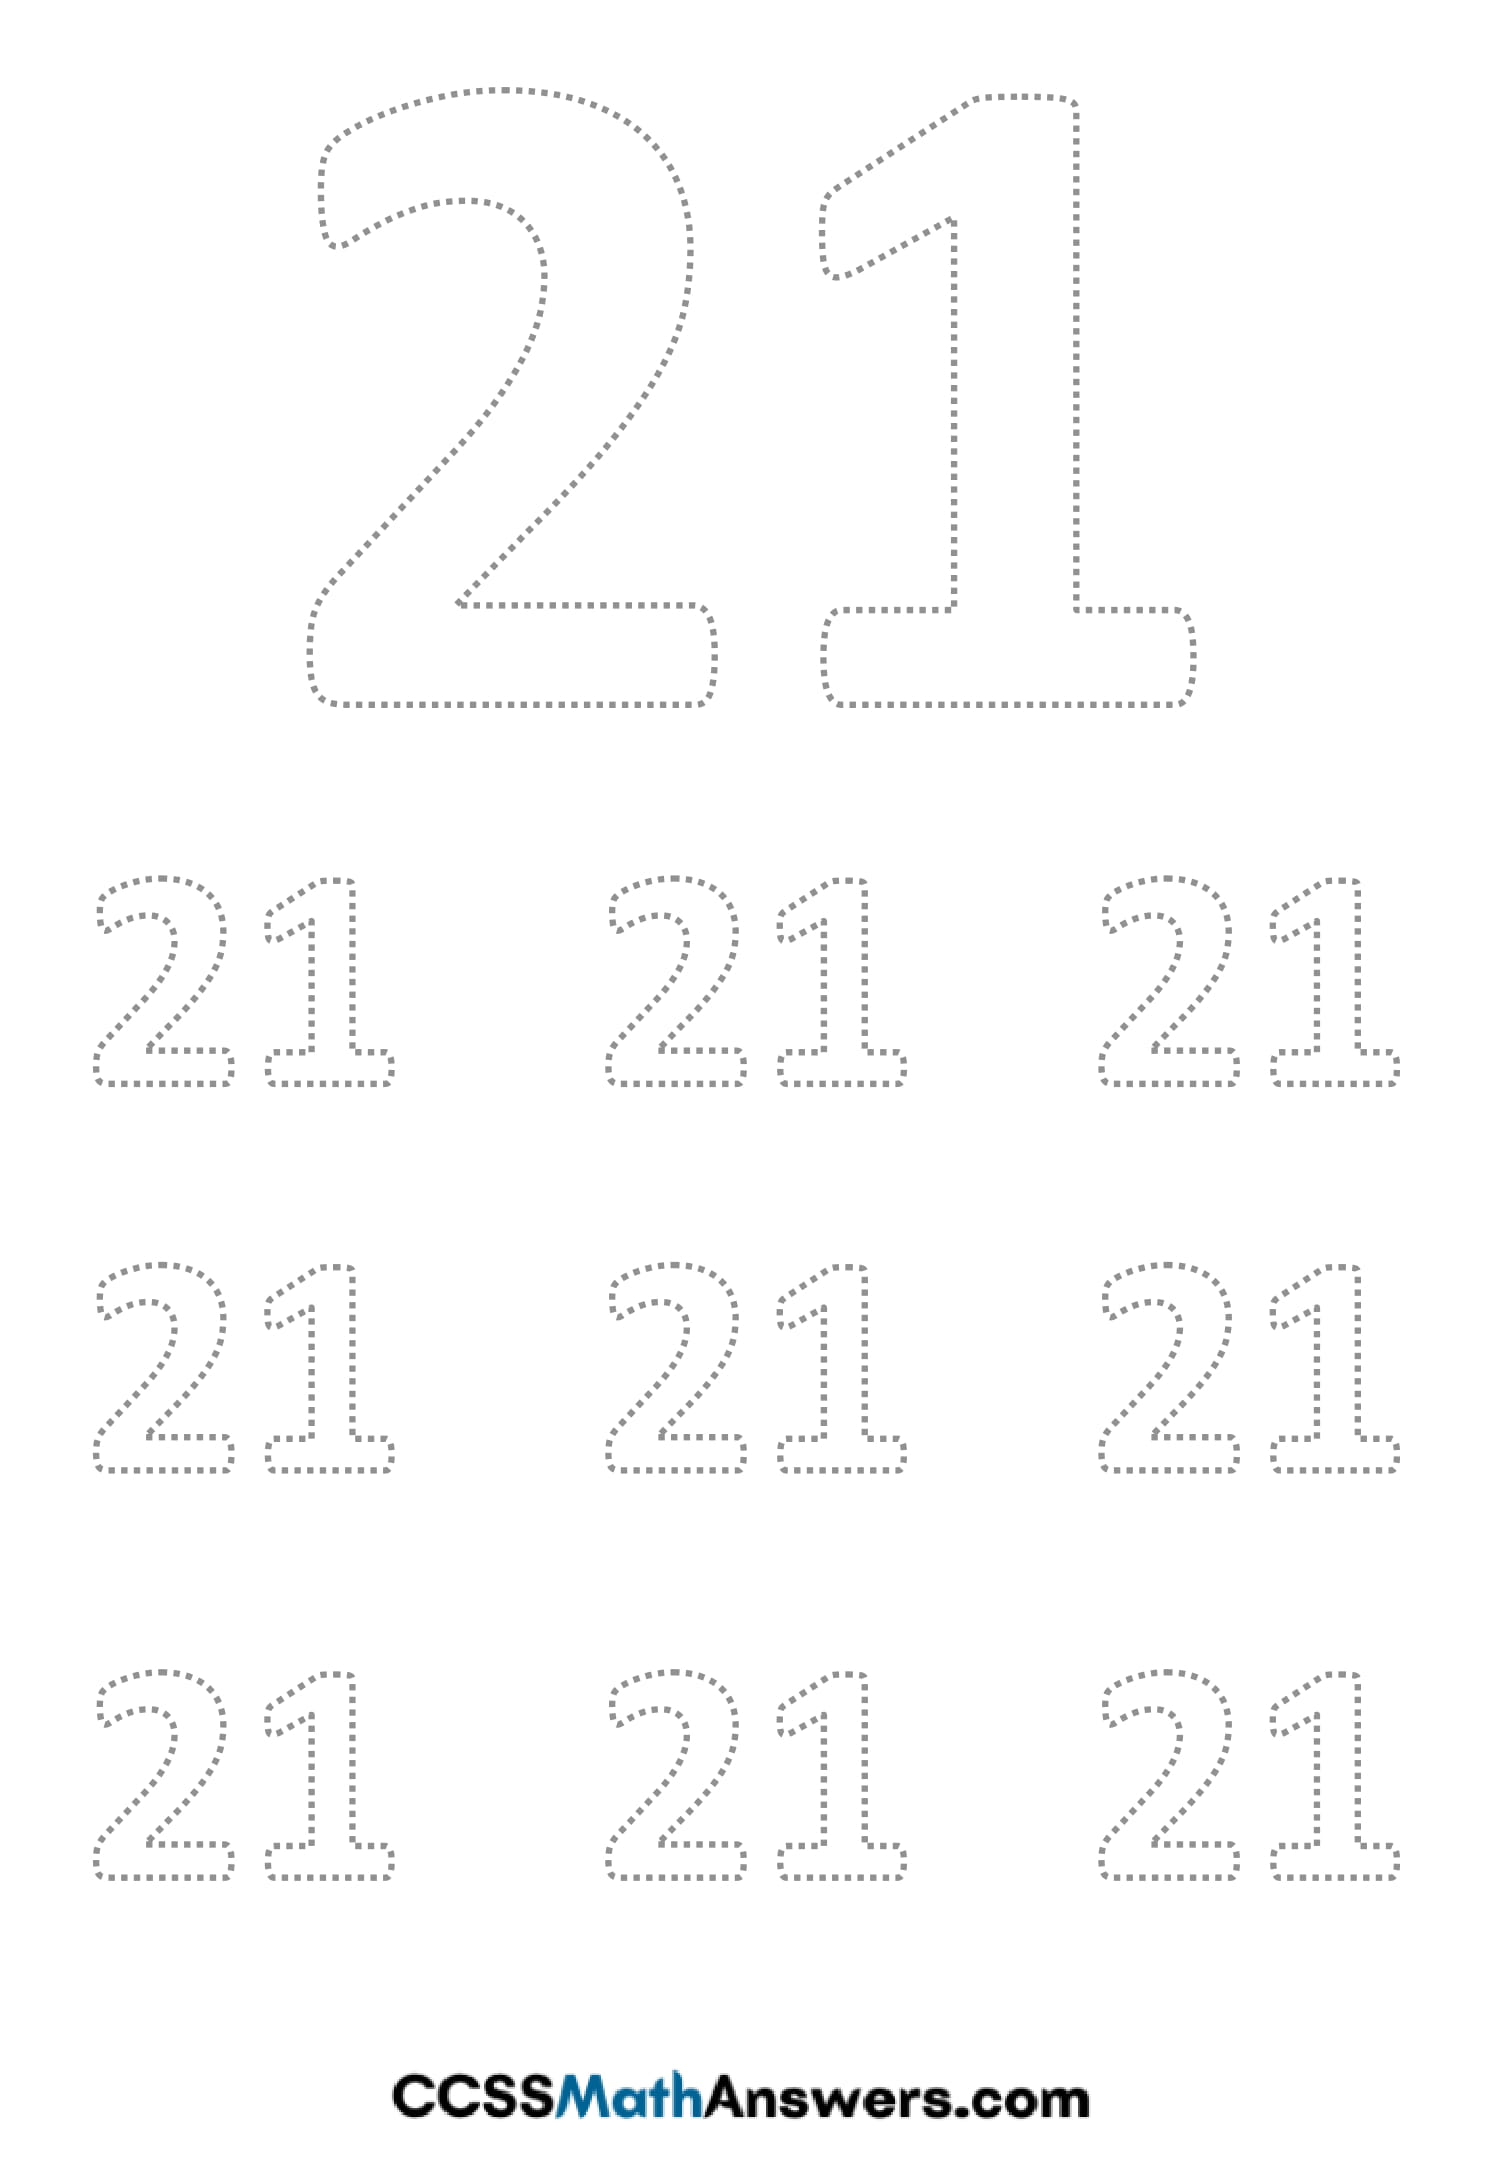 Worksheet On Number 21 Number 21 Tracing Worksheets Free Printable Number 21 Worksheets